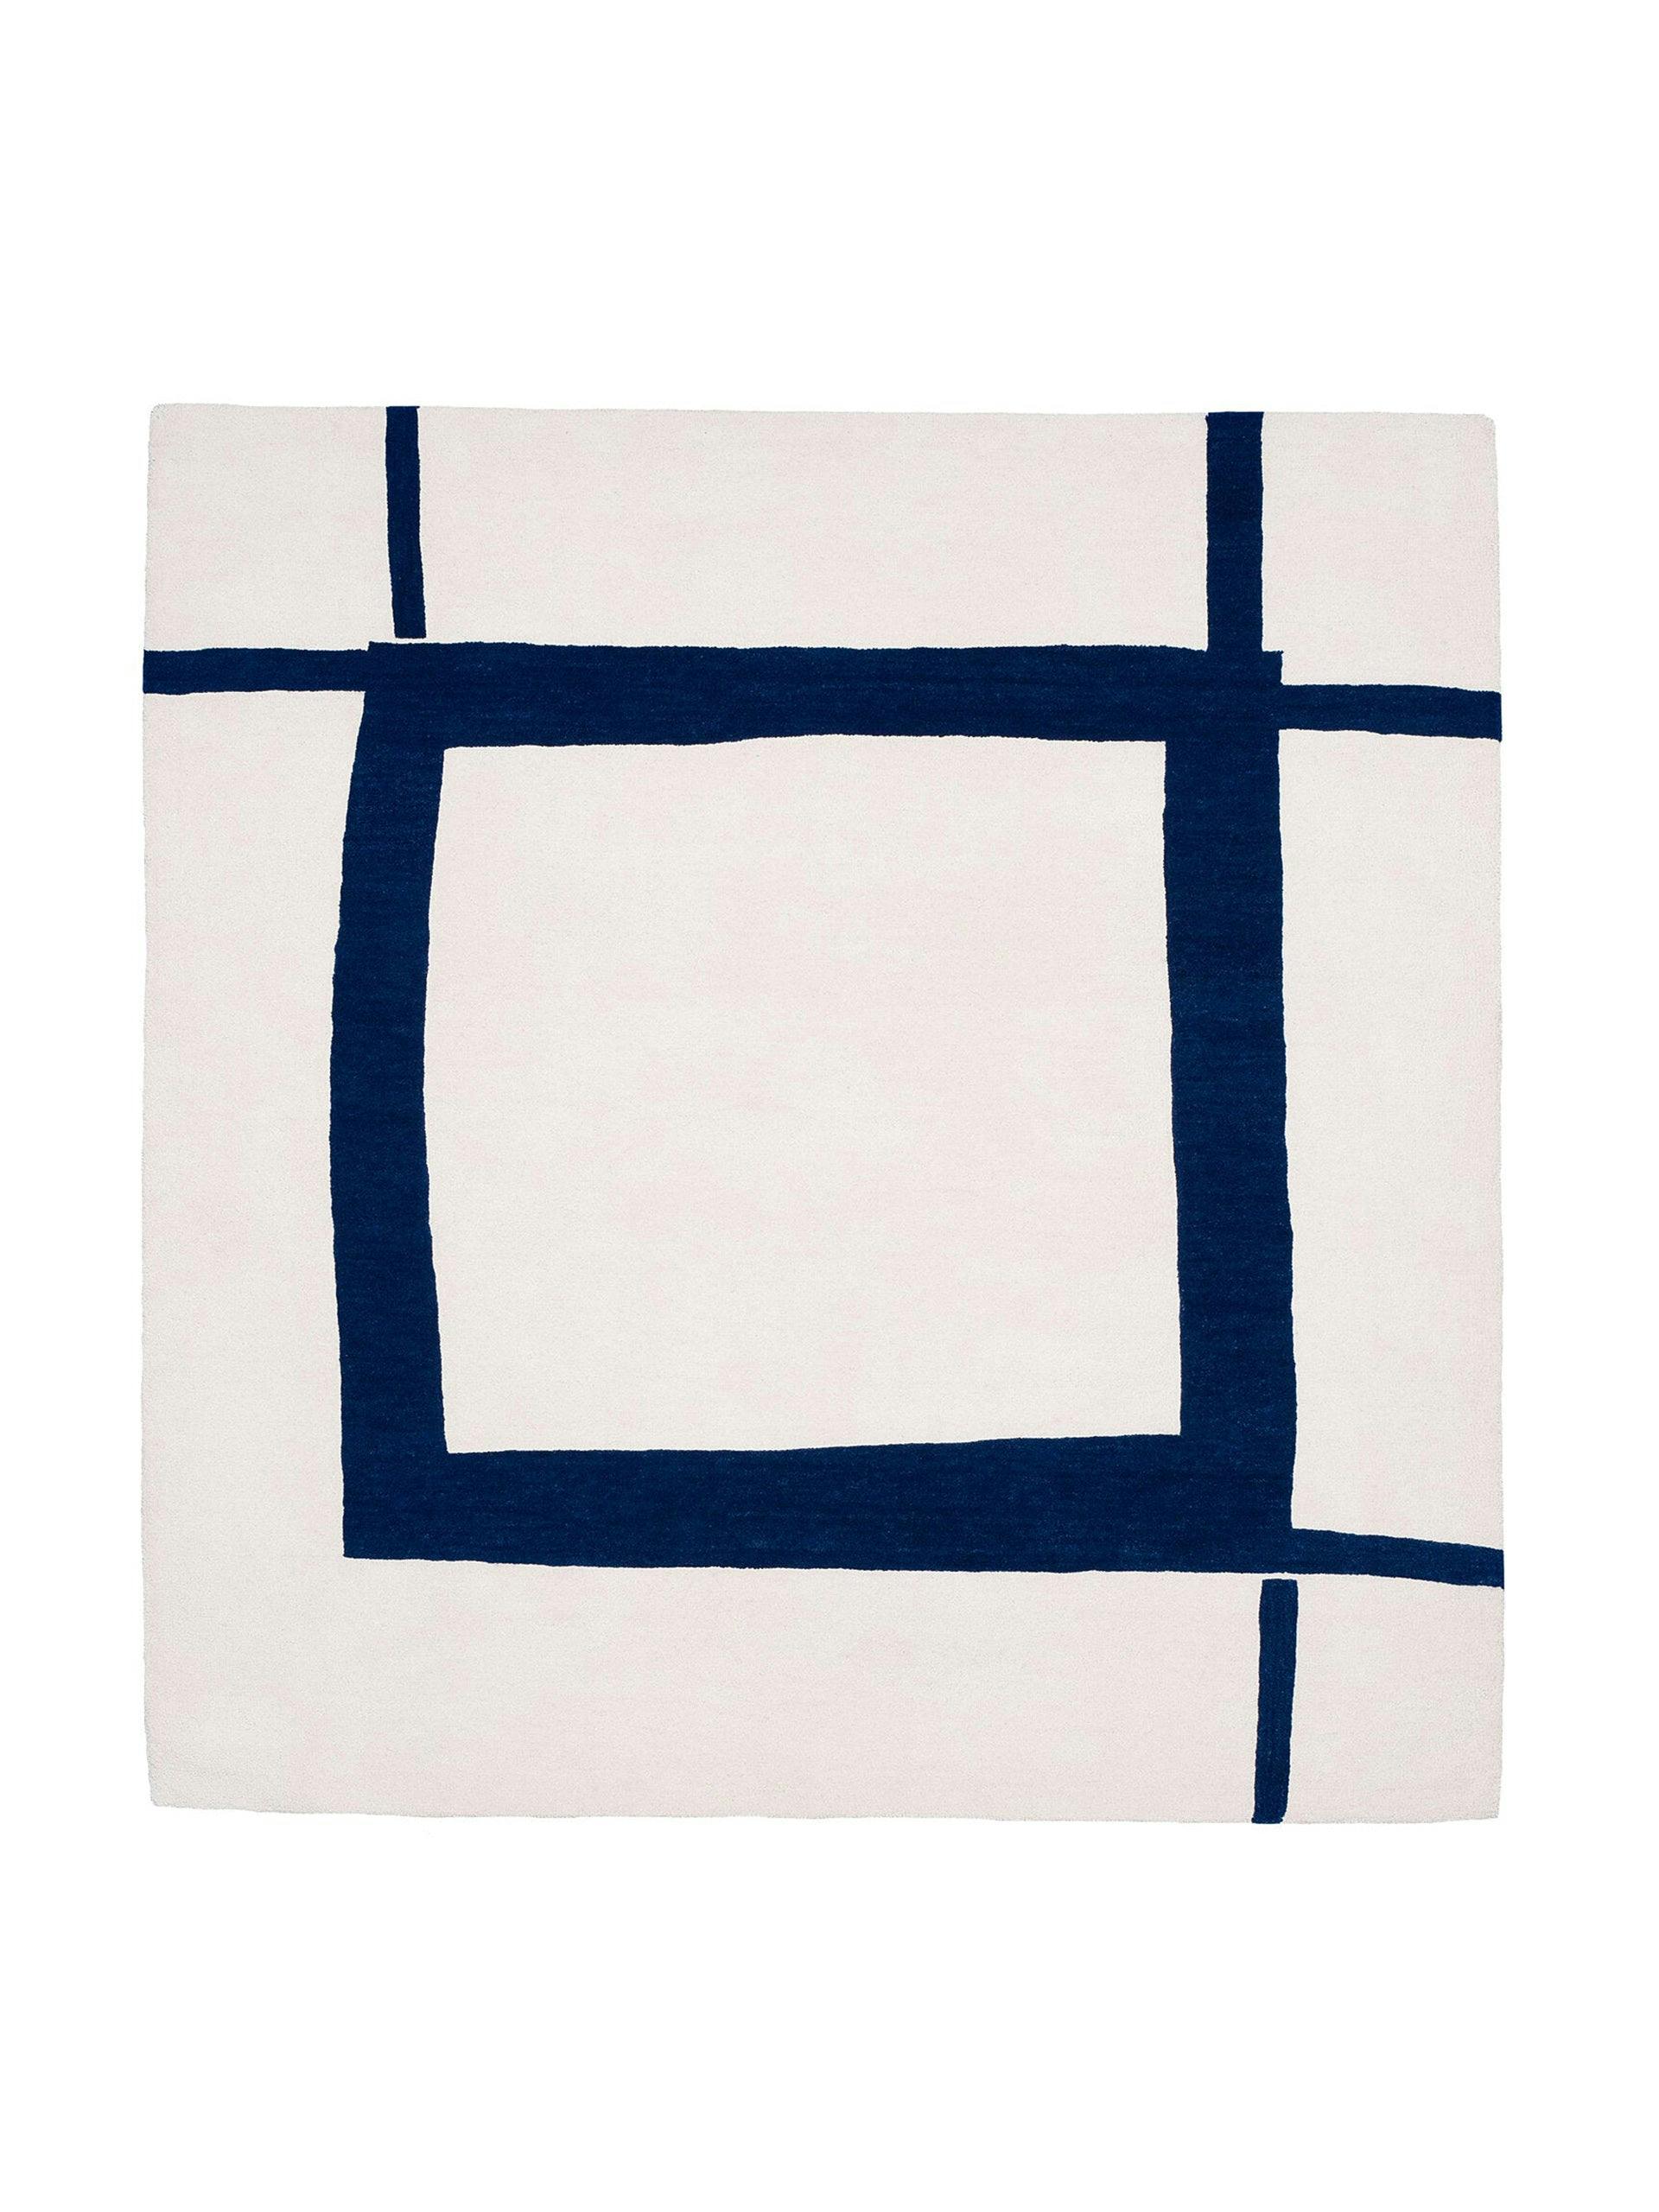 Three Squares by Sandra Blow - 2.1 x 2m